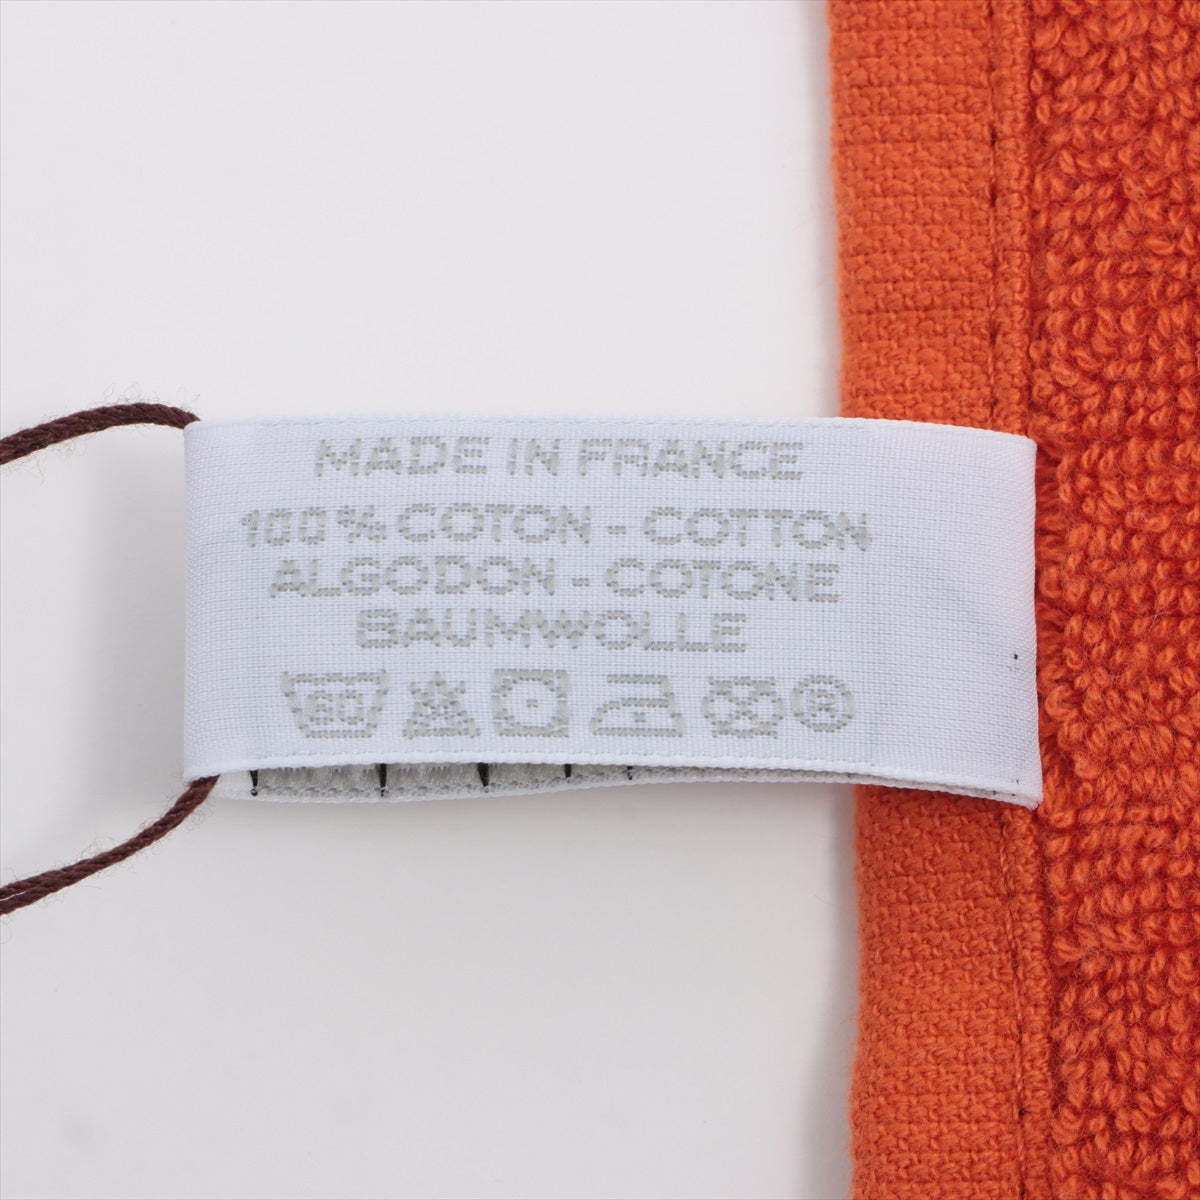 Hermès Kare Towel Stairs Towel Cotton ivory x orange 2 piece set